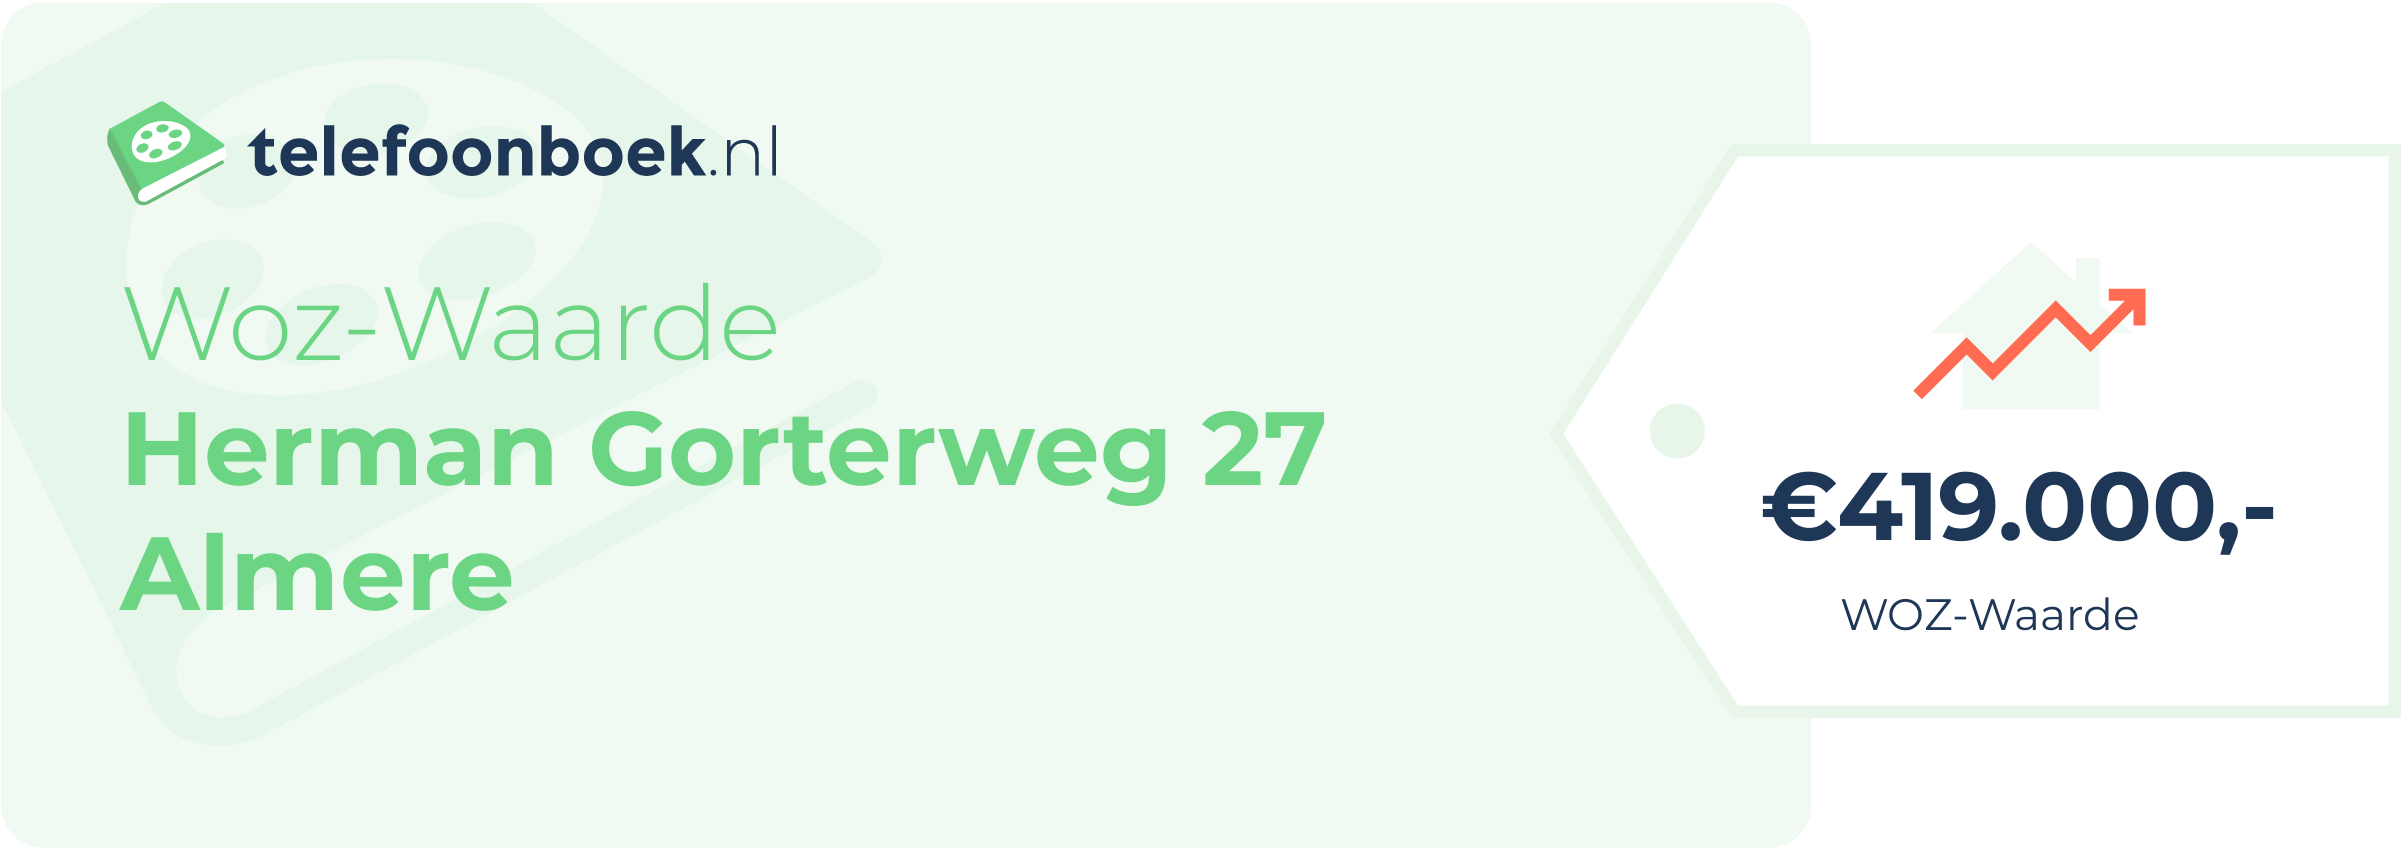 WOZ-waarde Herman Gorterweg 27 Almere